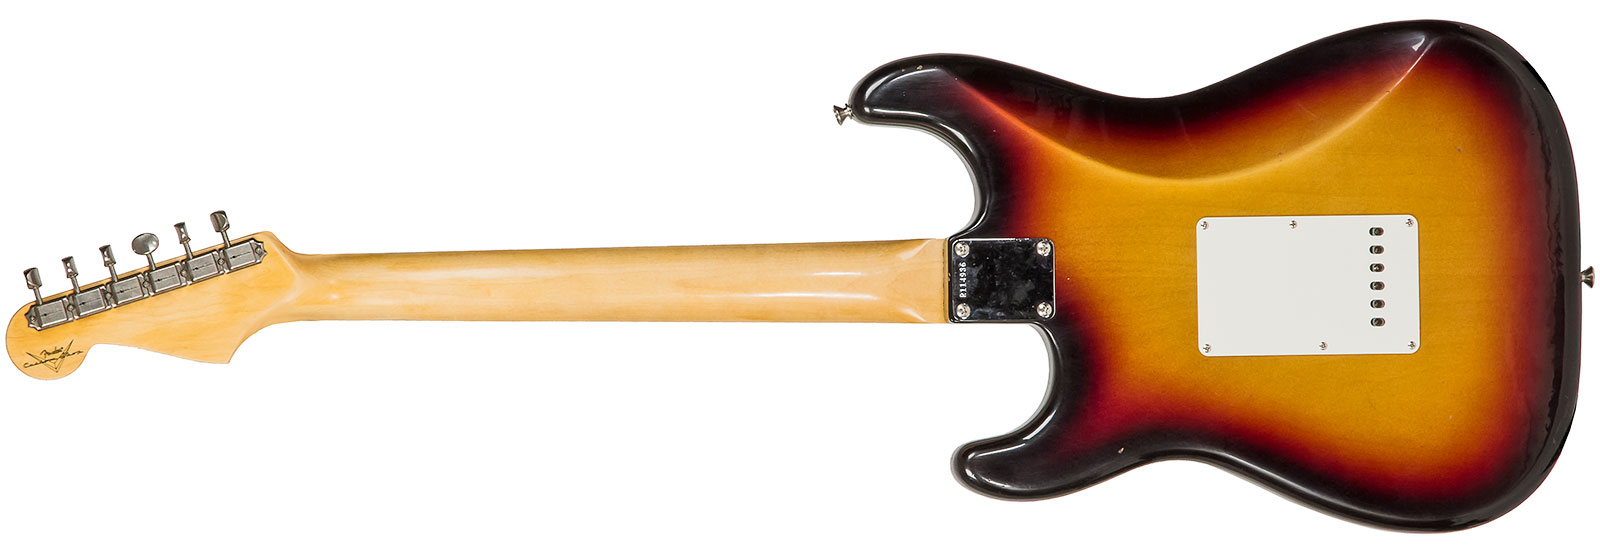 Fender Custom Shop Strat 1964 Rw #r114936 - Journeyman Relic 3-color Sunburst - Str shape electric guitar - Variation 1